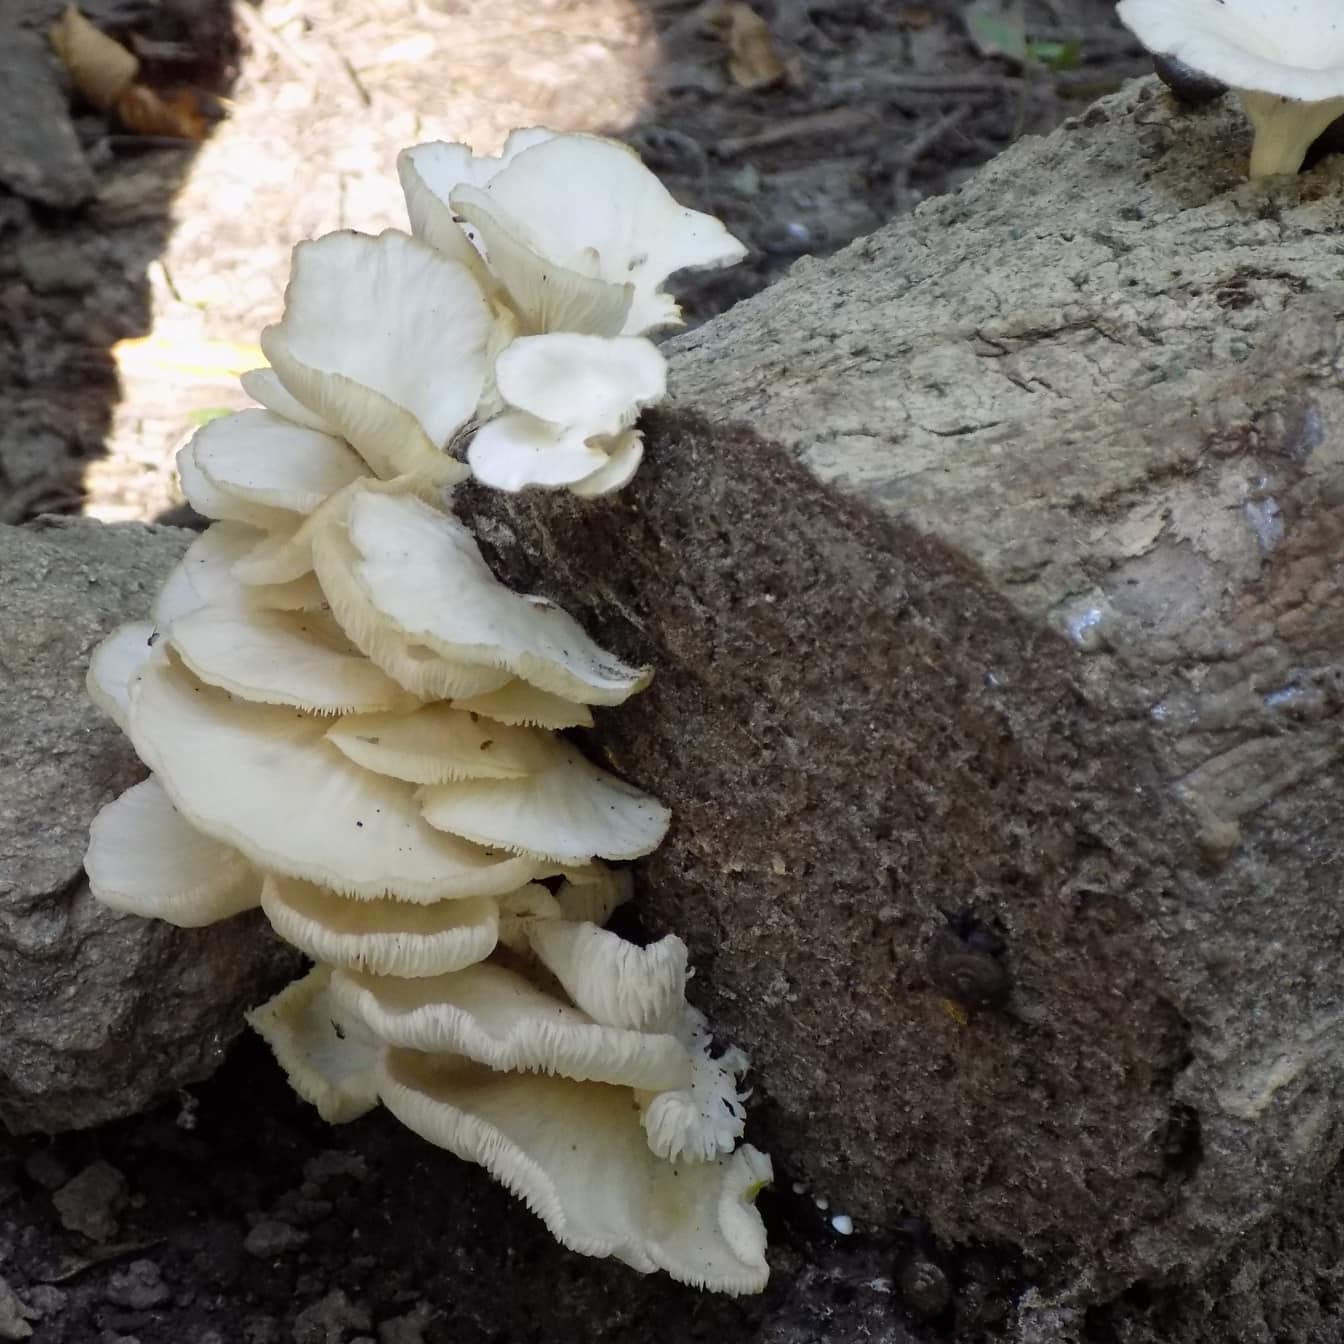 Hvide svampe på træstamme (Pleurotus pulmonarius) nærbillede